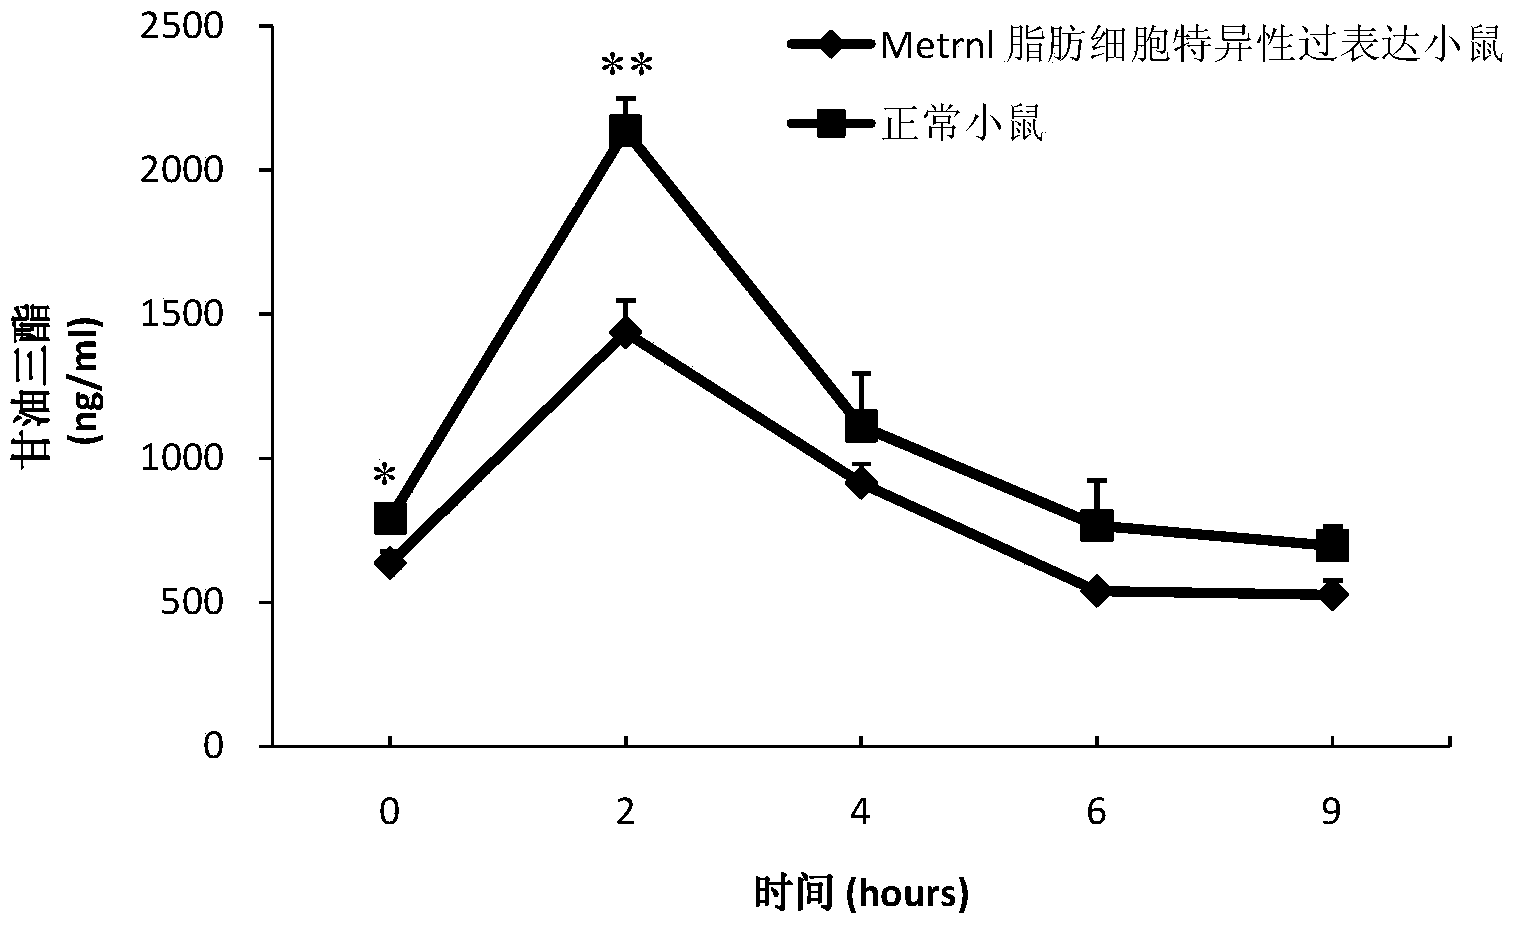 Application of metrn1 protein in aspect of preparation of lipid-lowering drug